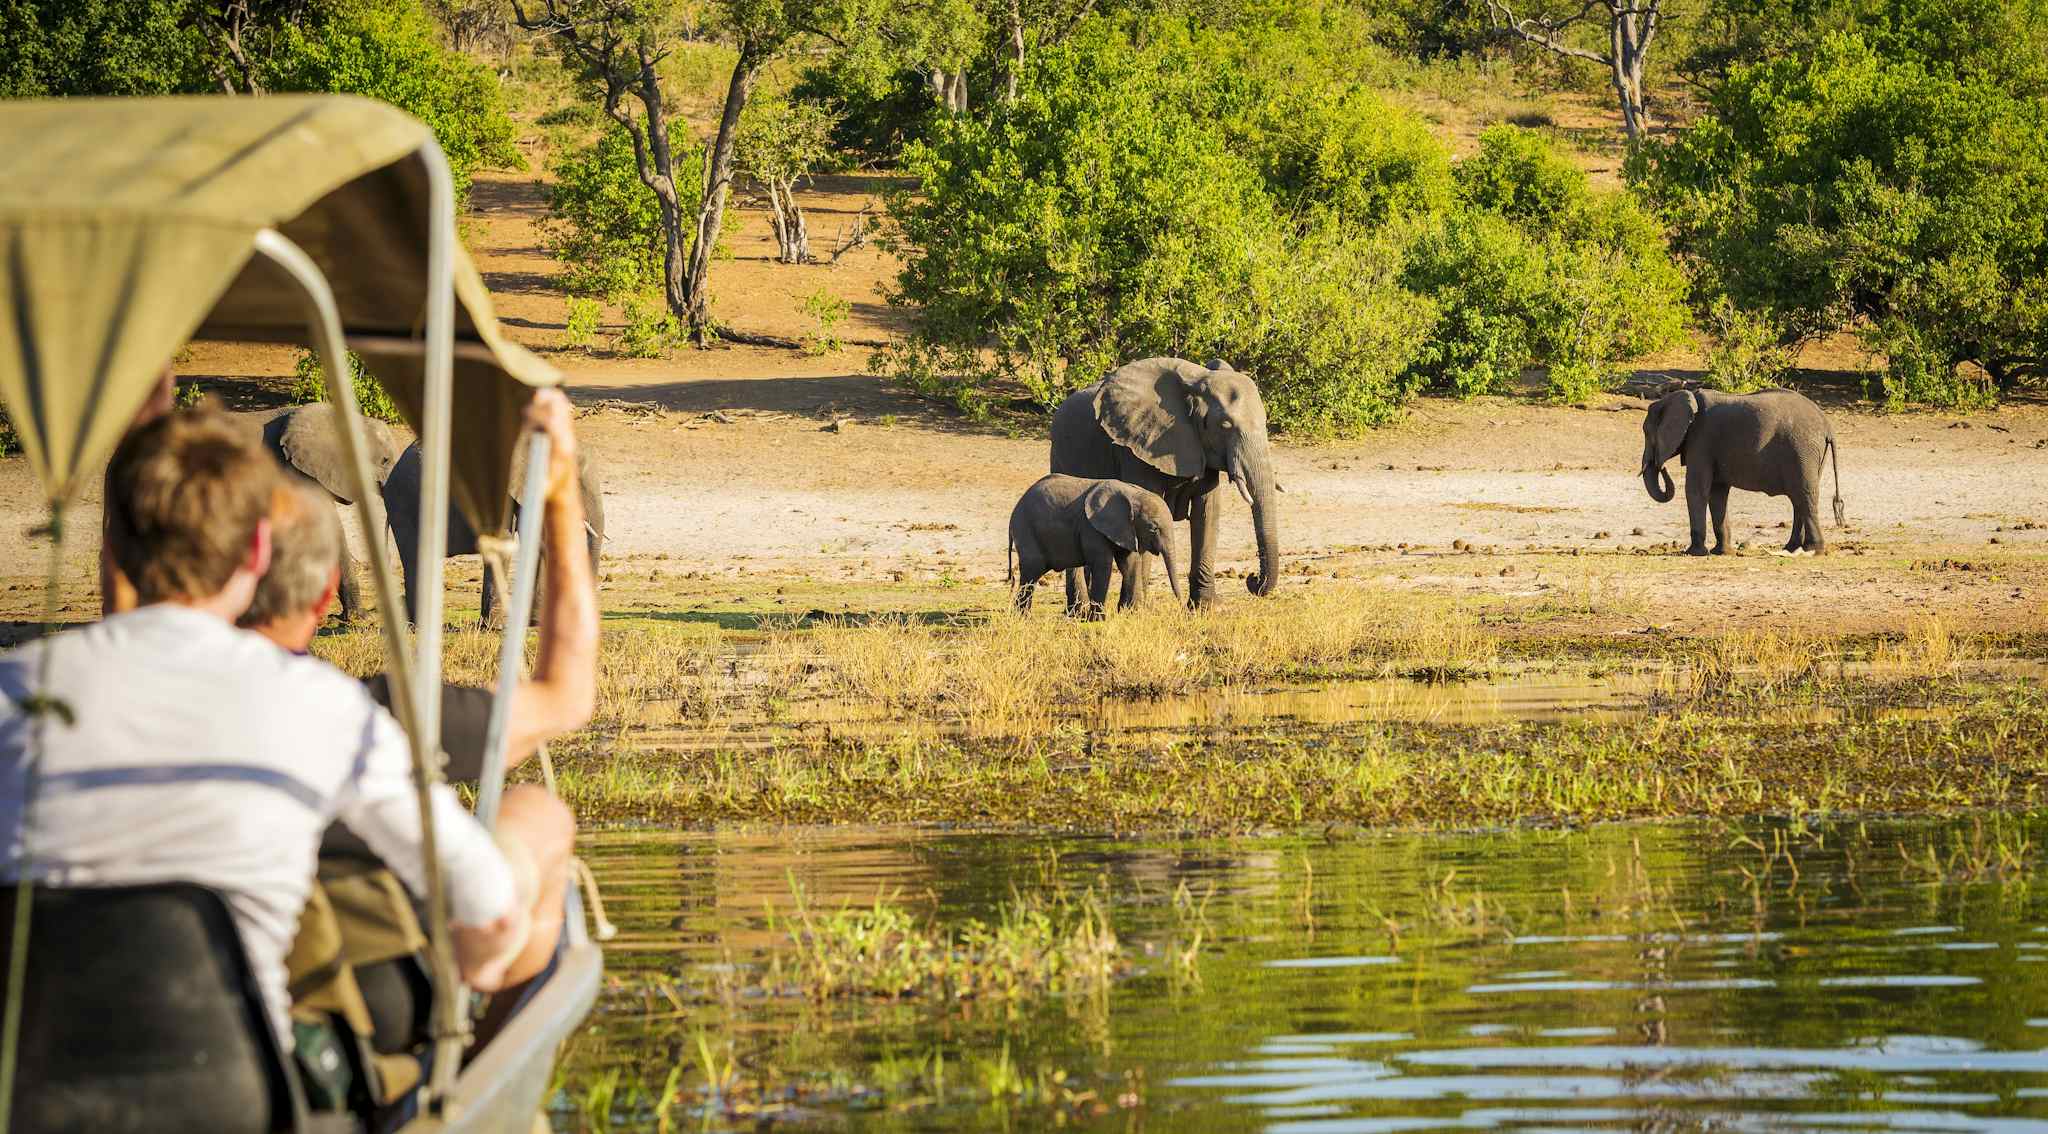 Safari goers on a Chobe River Cruise, Botswana
Shutterstock: 480338395